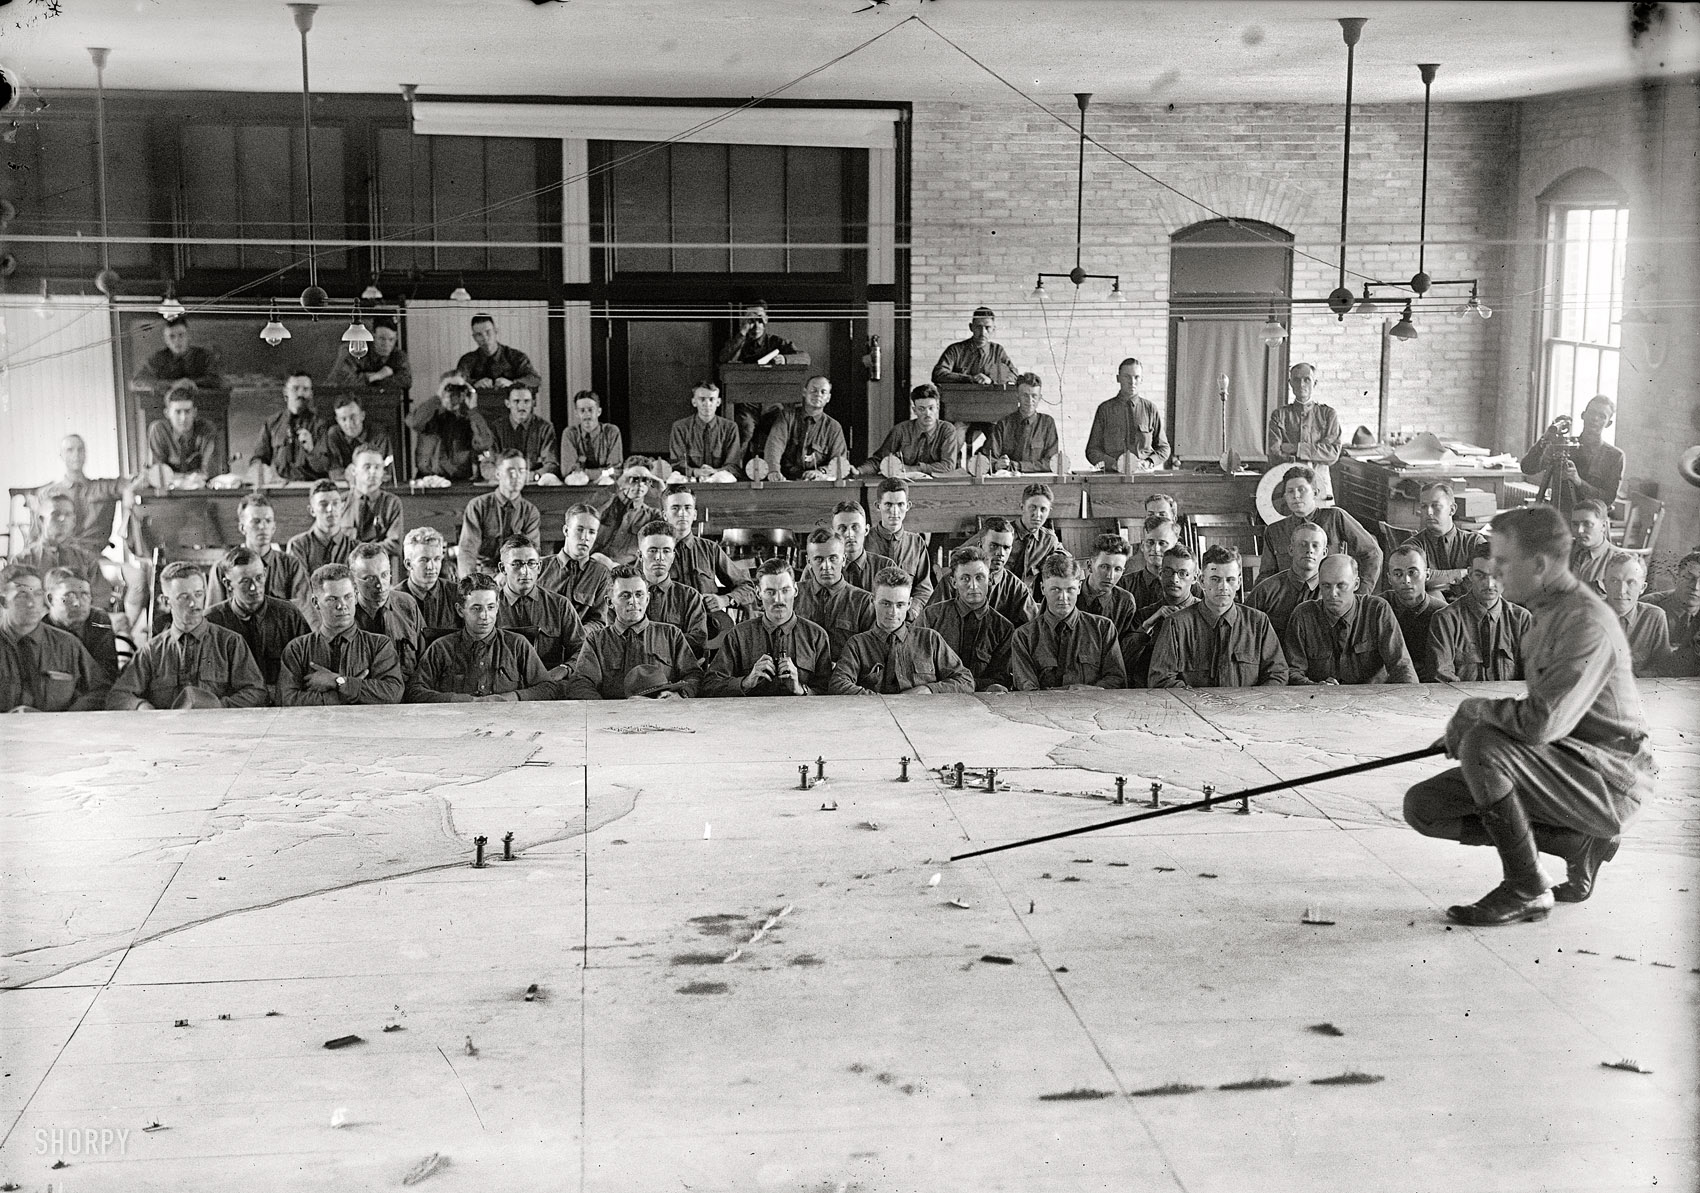 Washington vicinity ca. 1917. "Military training." Harris & Ewing. View full size.